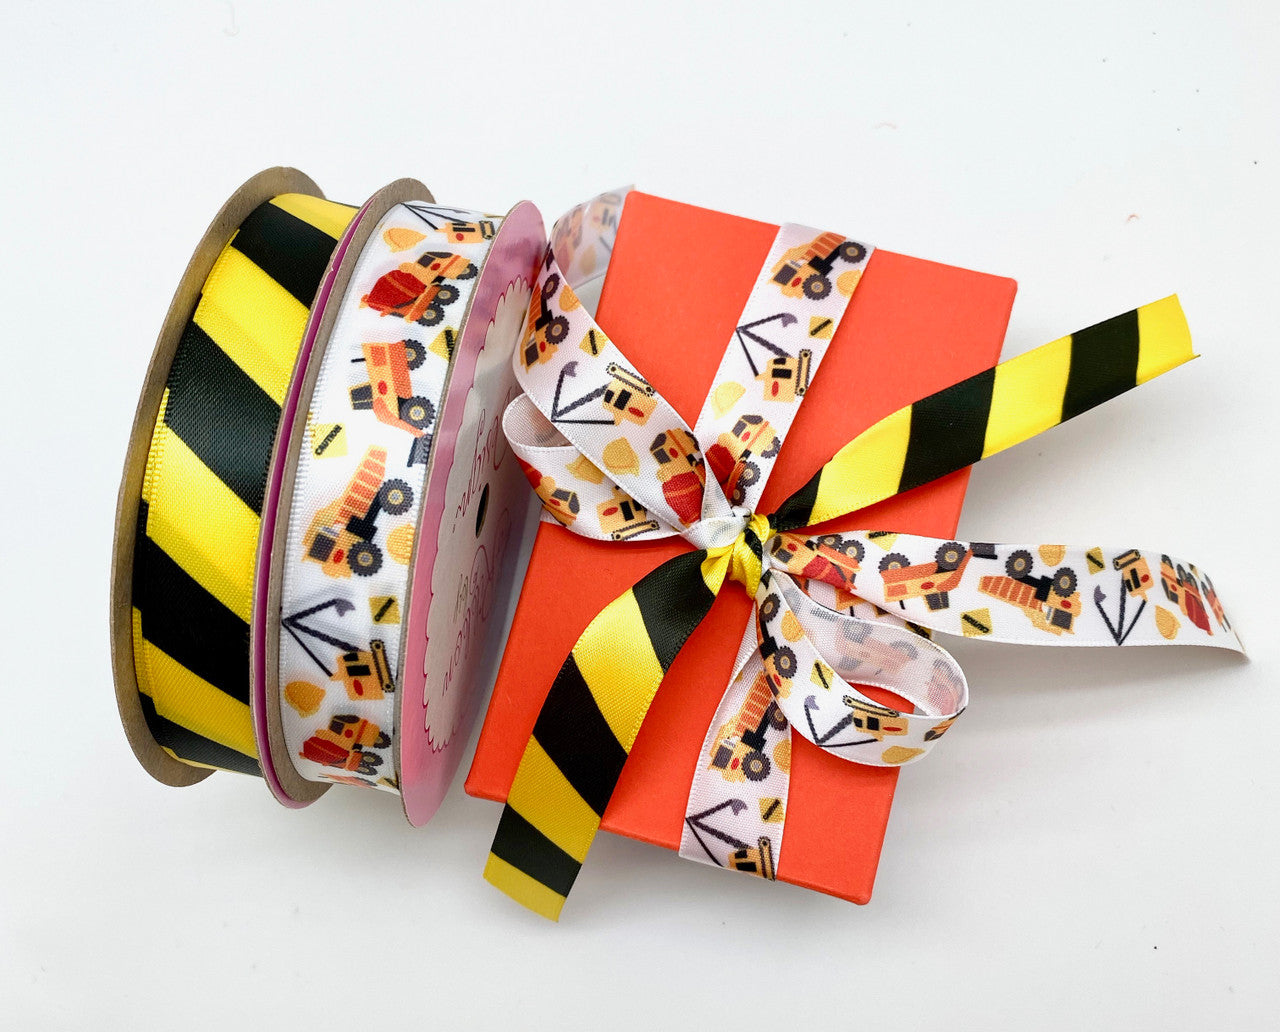 Caution Tape ribbon diagonal black stripes printed on 5/8" 7/8" and 1.5" bright yellow single face satin